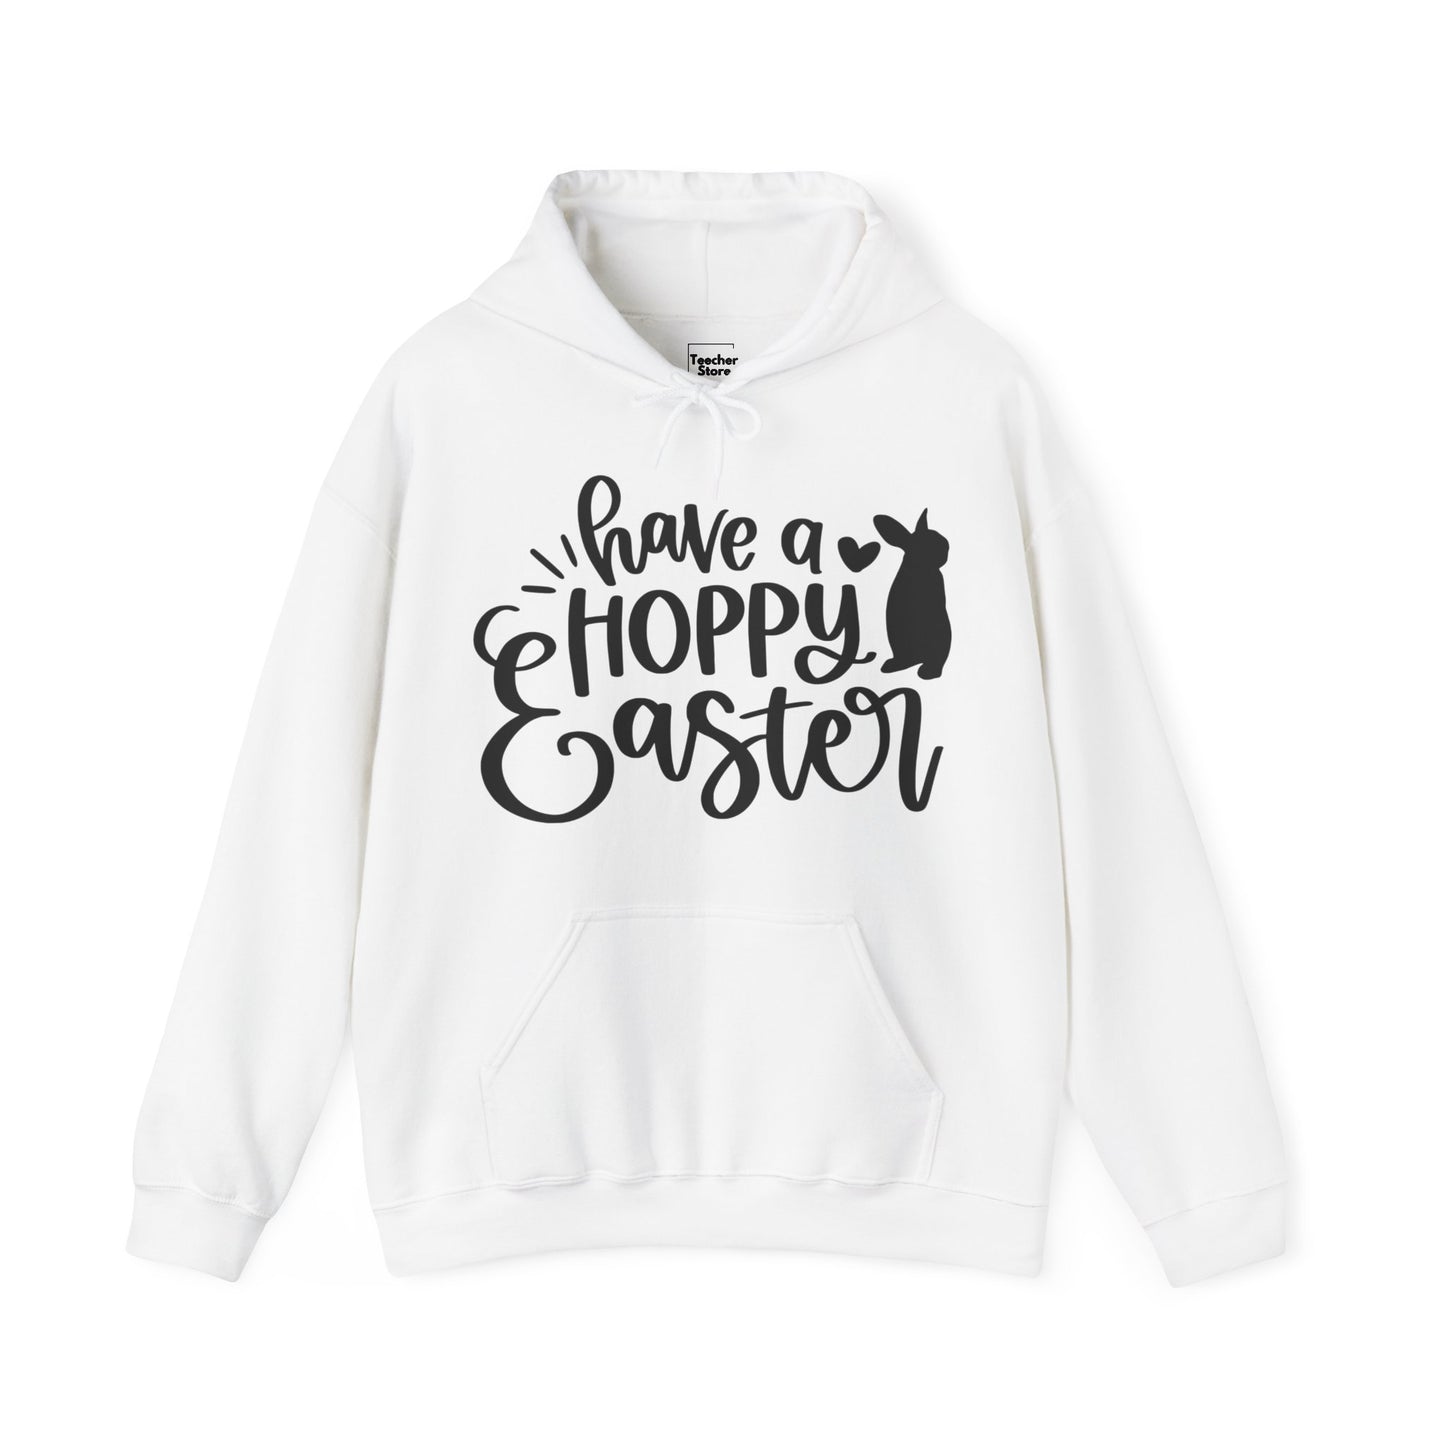 Hoppy Easter Hooded Sweatshirt